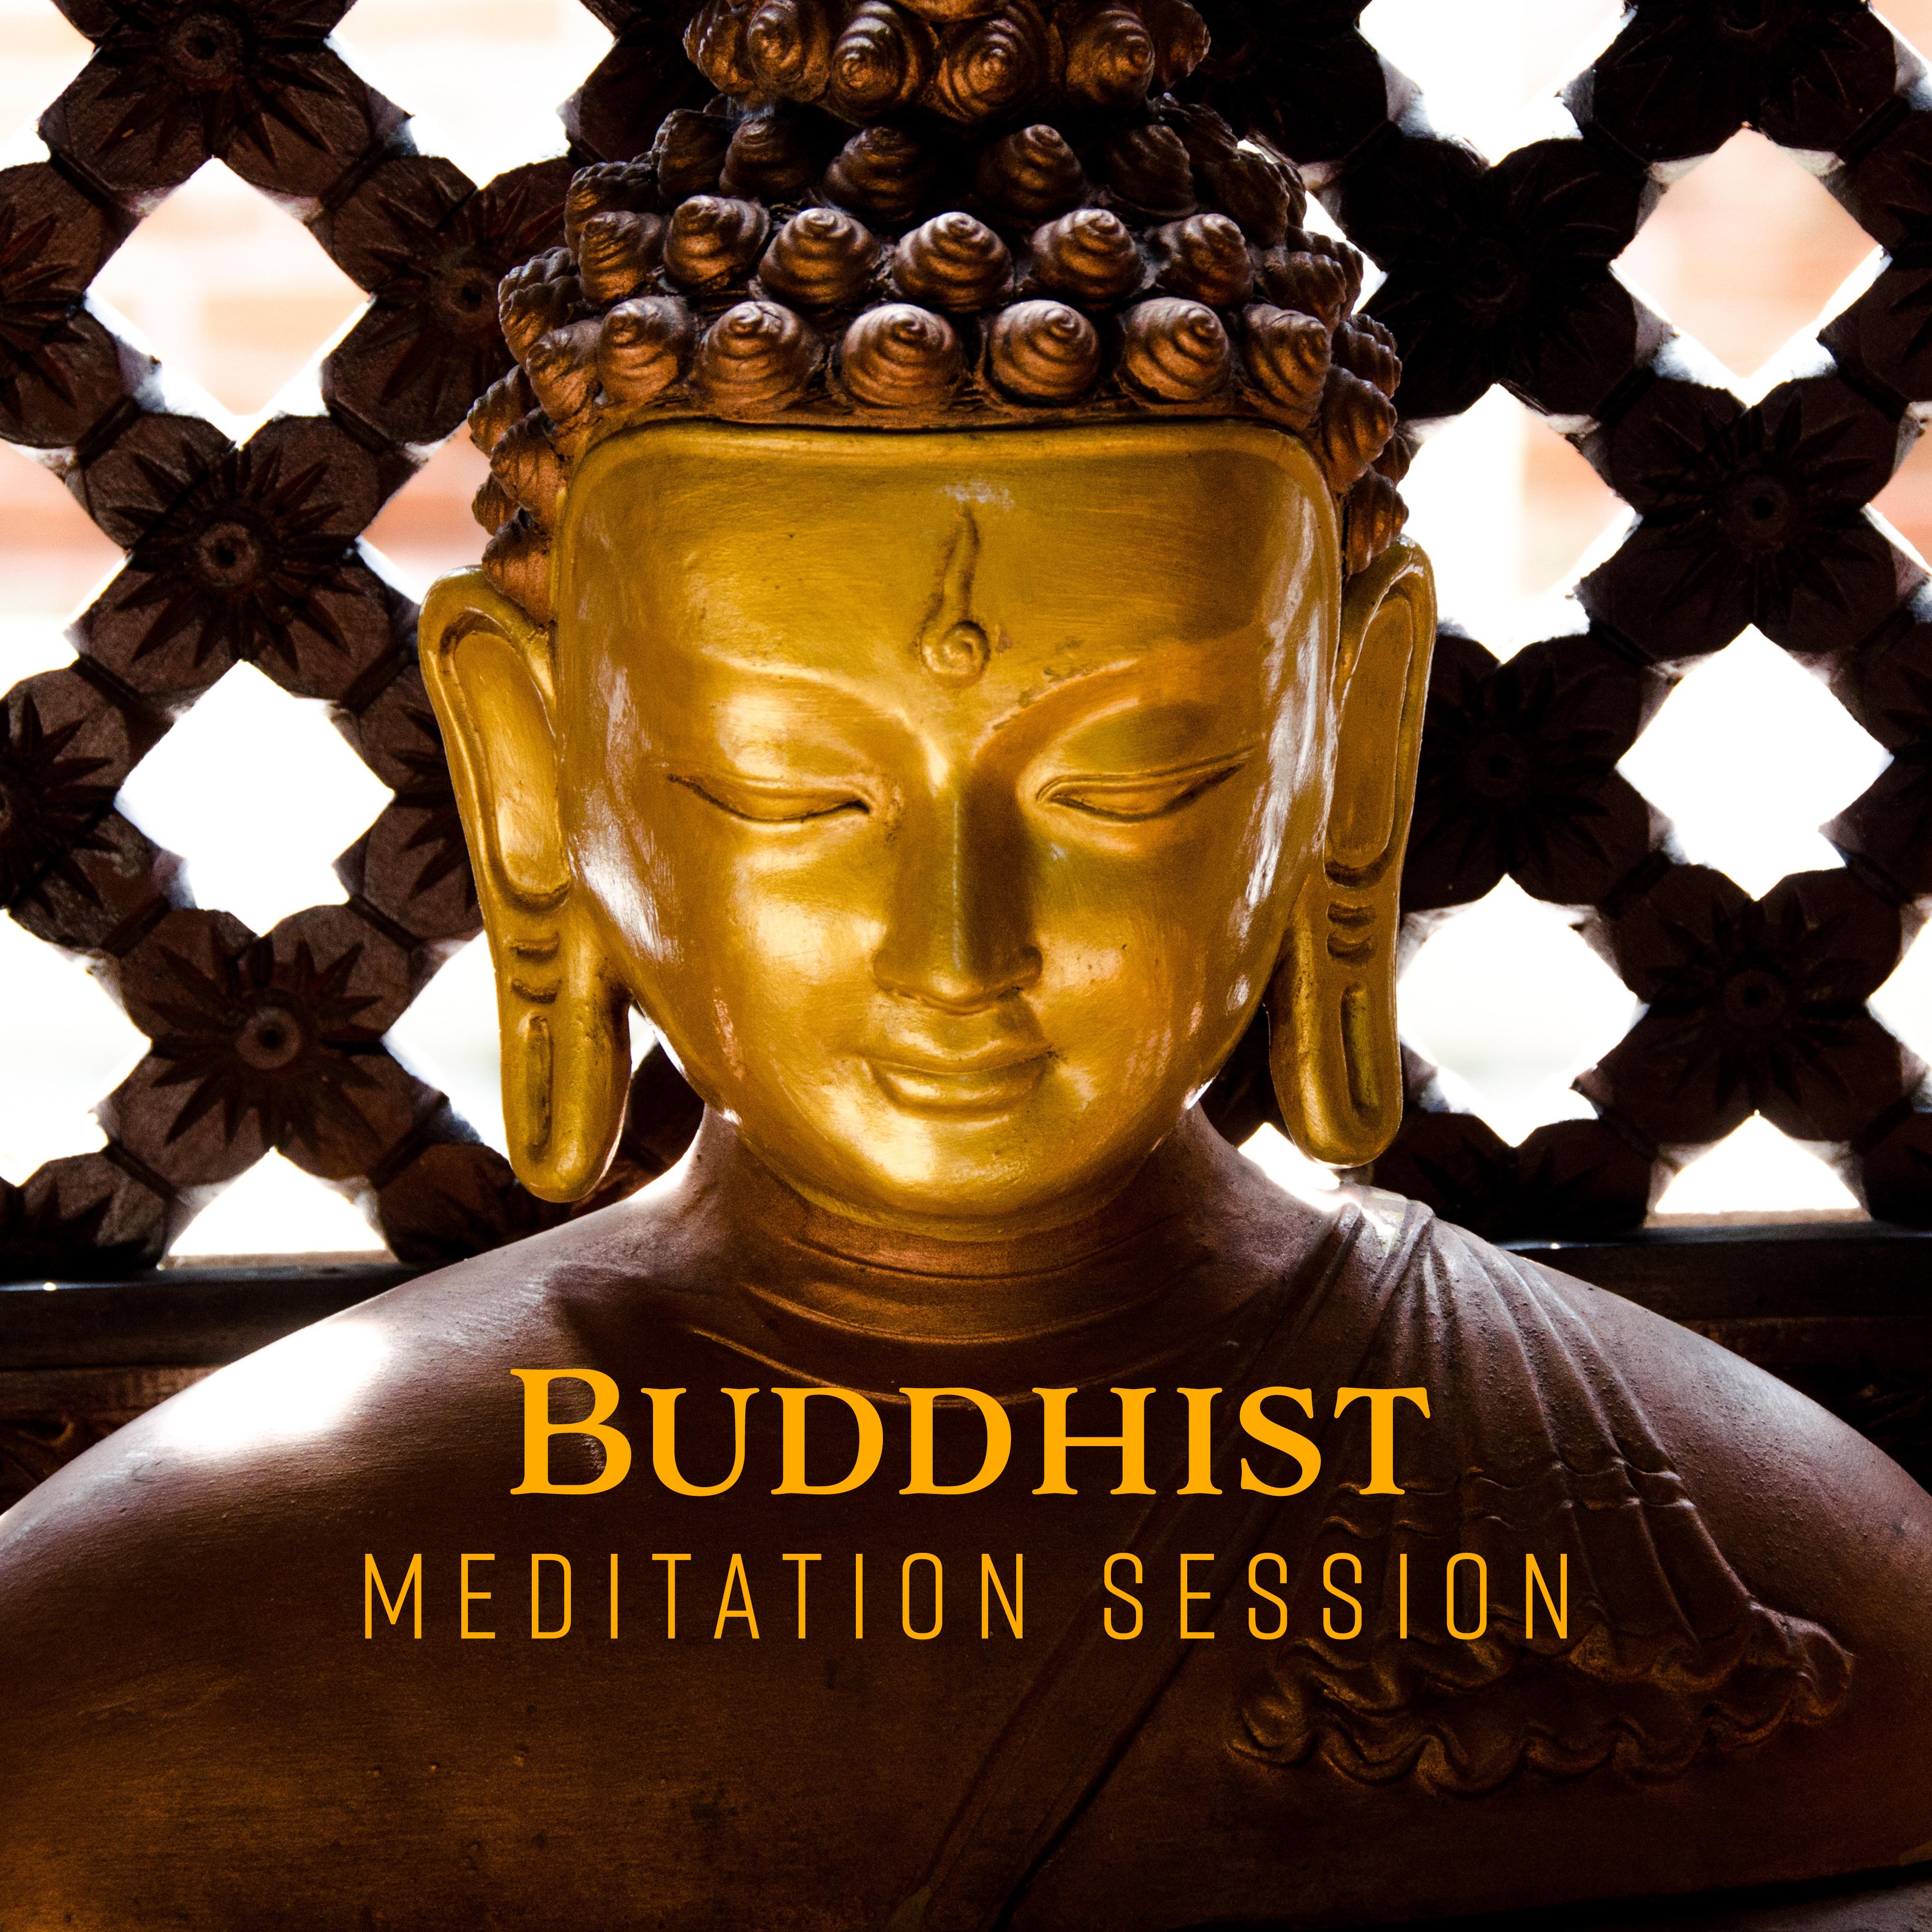 Buddhist Meditation Session – Yoga & Meditation New Age Music, Spiritual Journey, Empower Your Mind